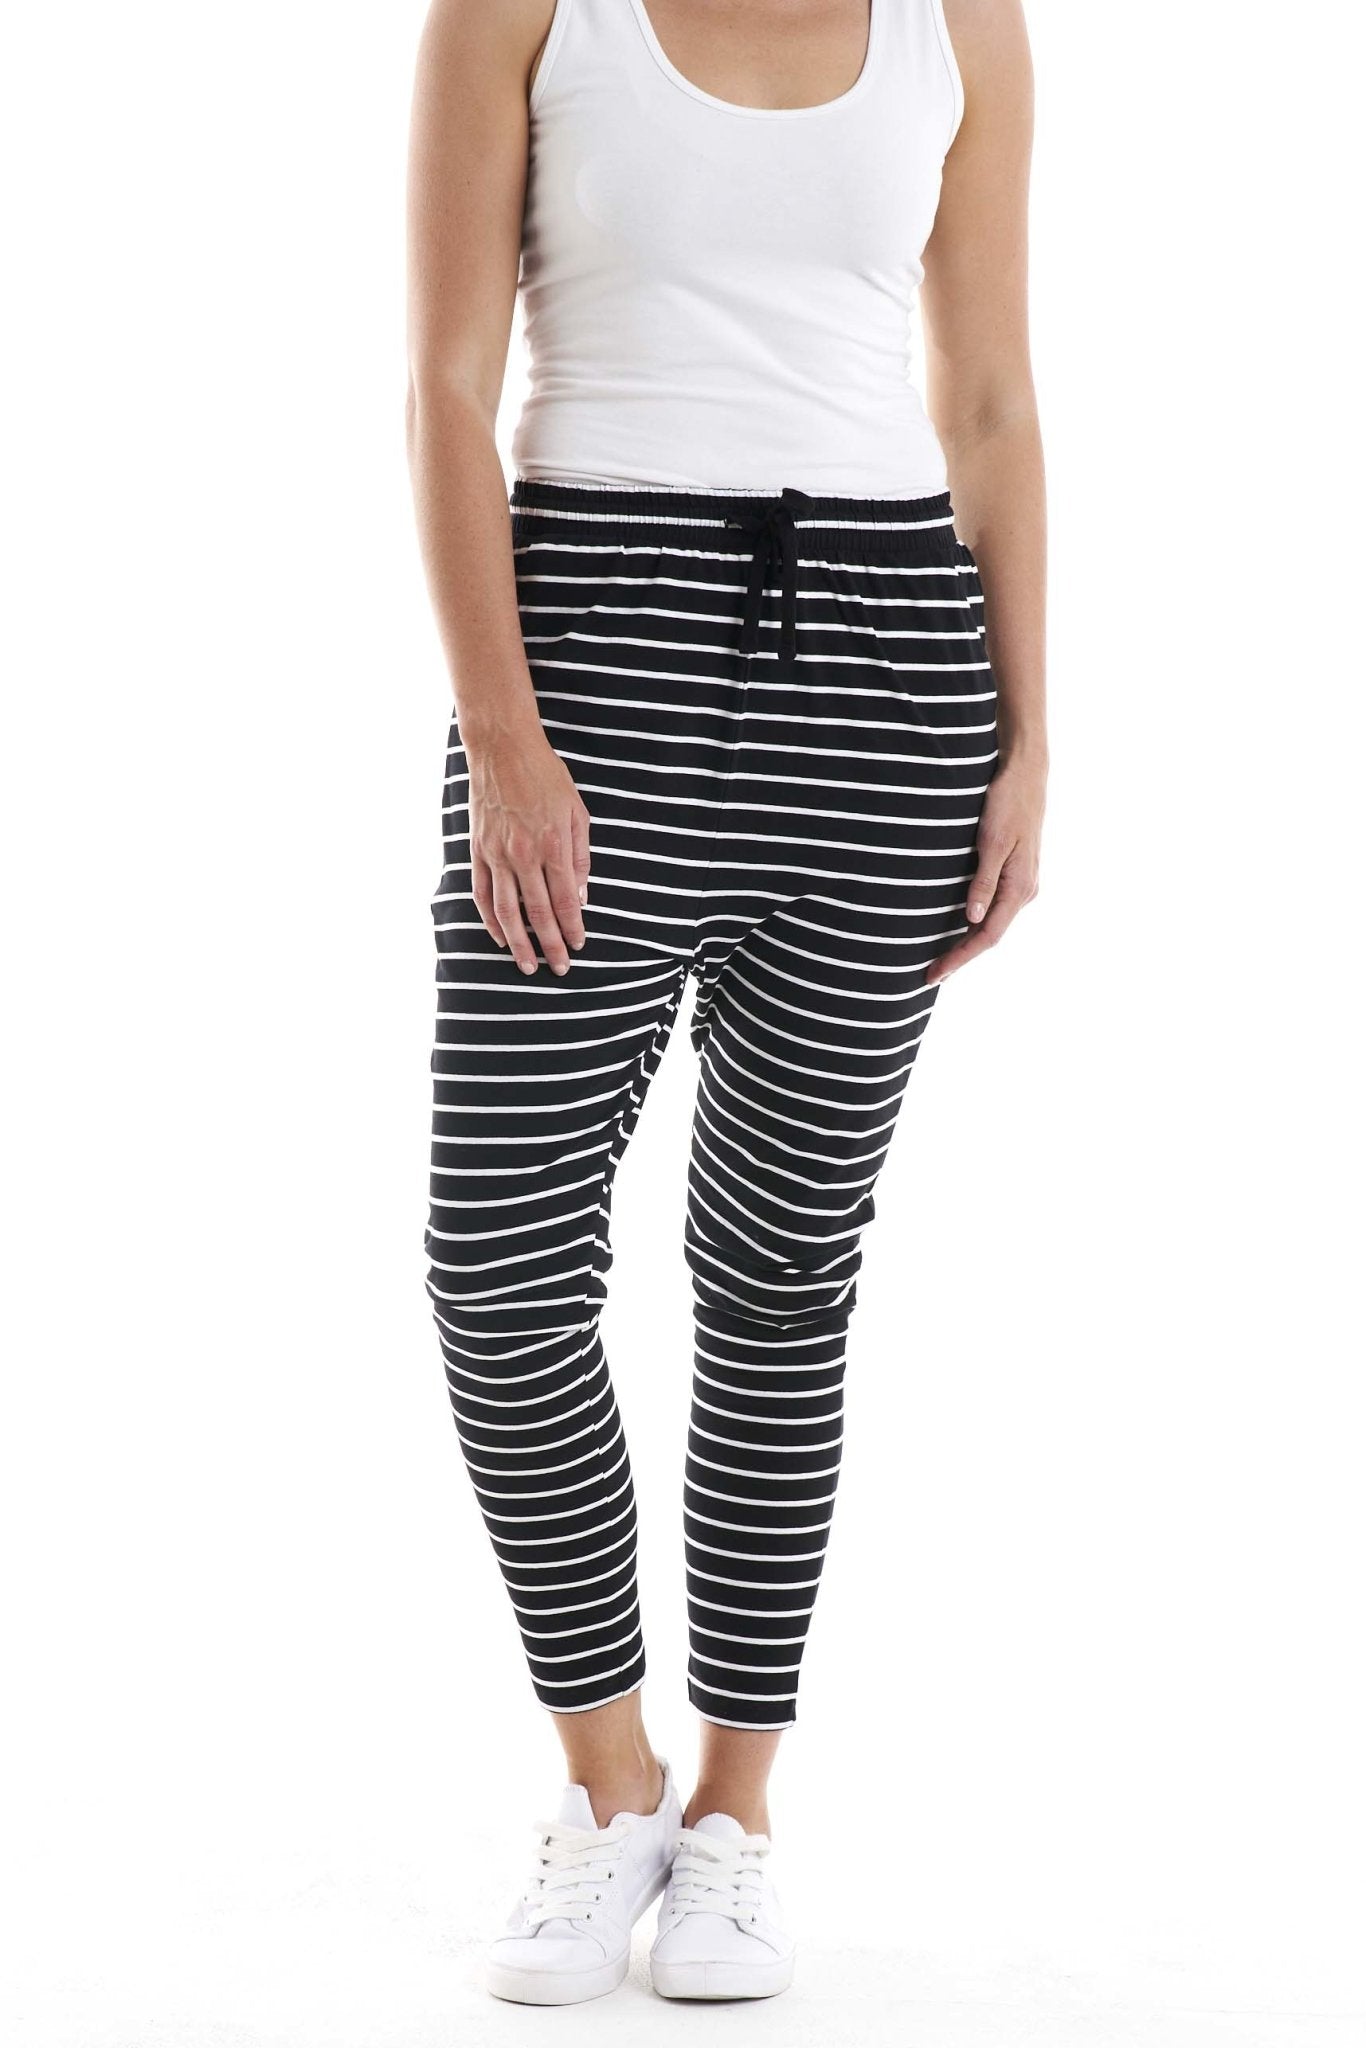 Betty Basics Jade Pant in Black with White Stripe - Hey Sara